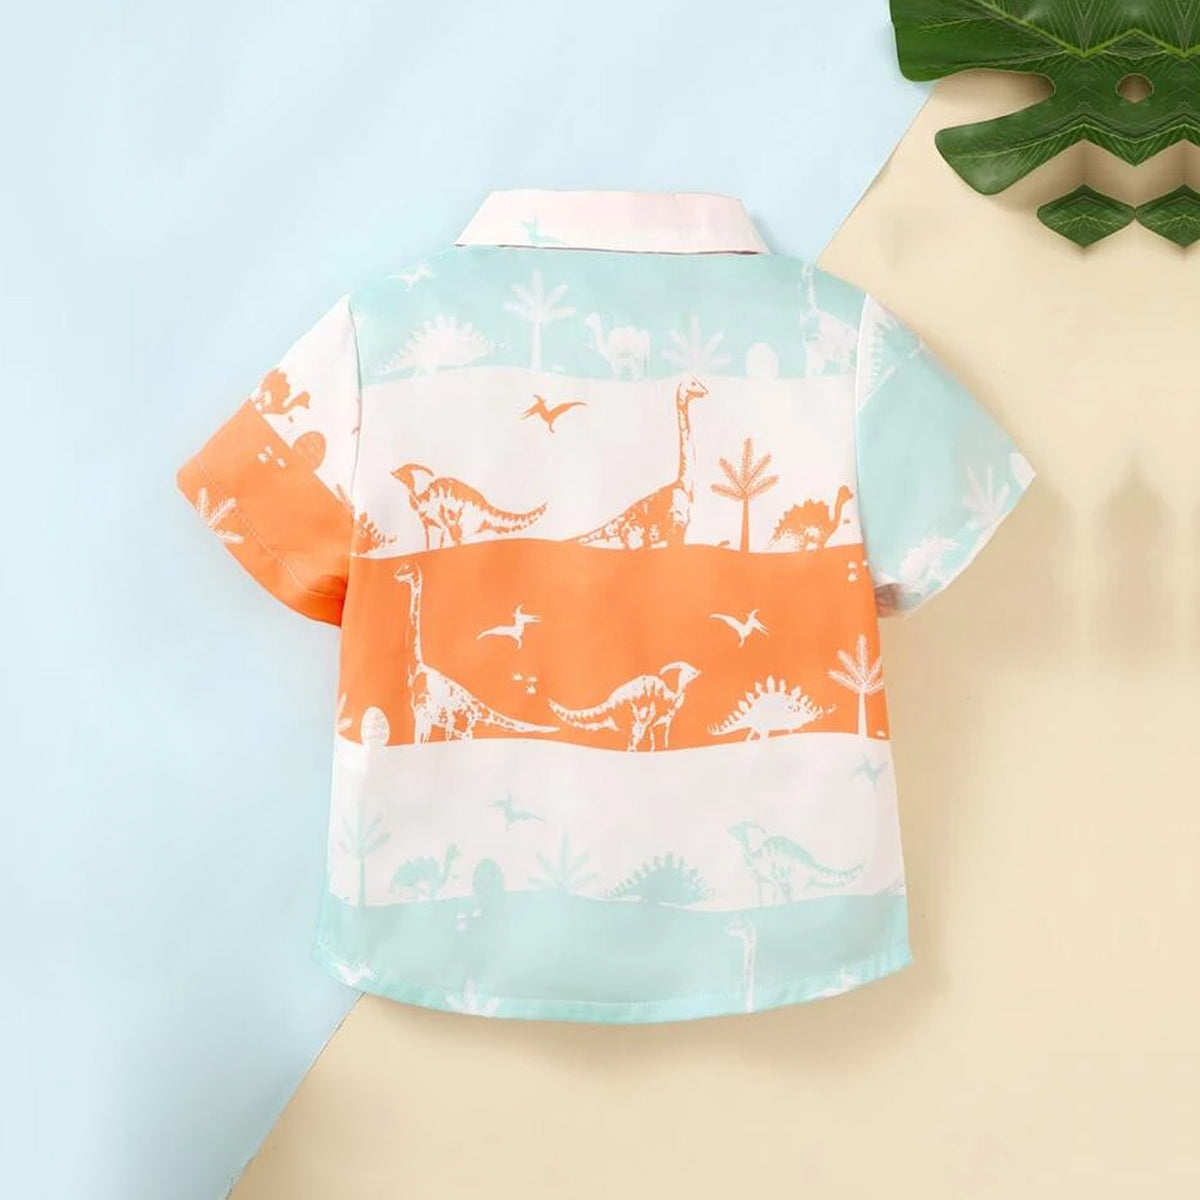 Venutaloza Dinosaur Animal &Tree Button Front Beach Shirt (Combo Pack Of 2) For Boy.